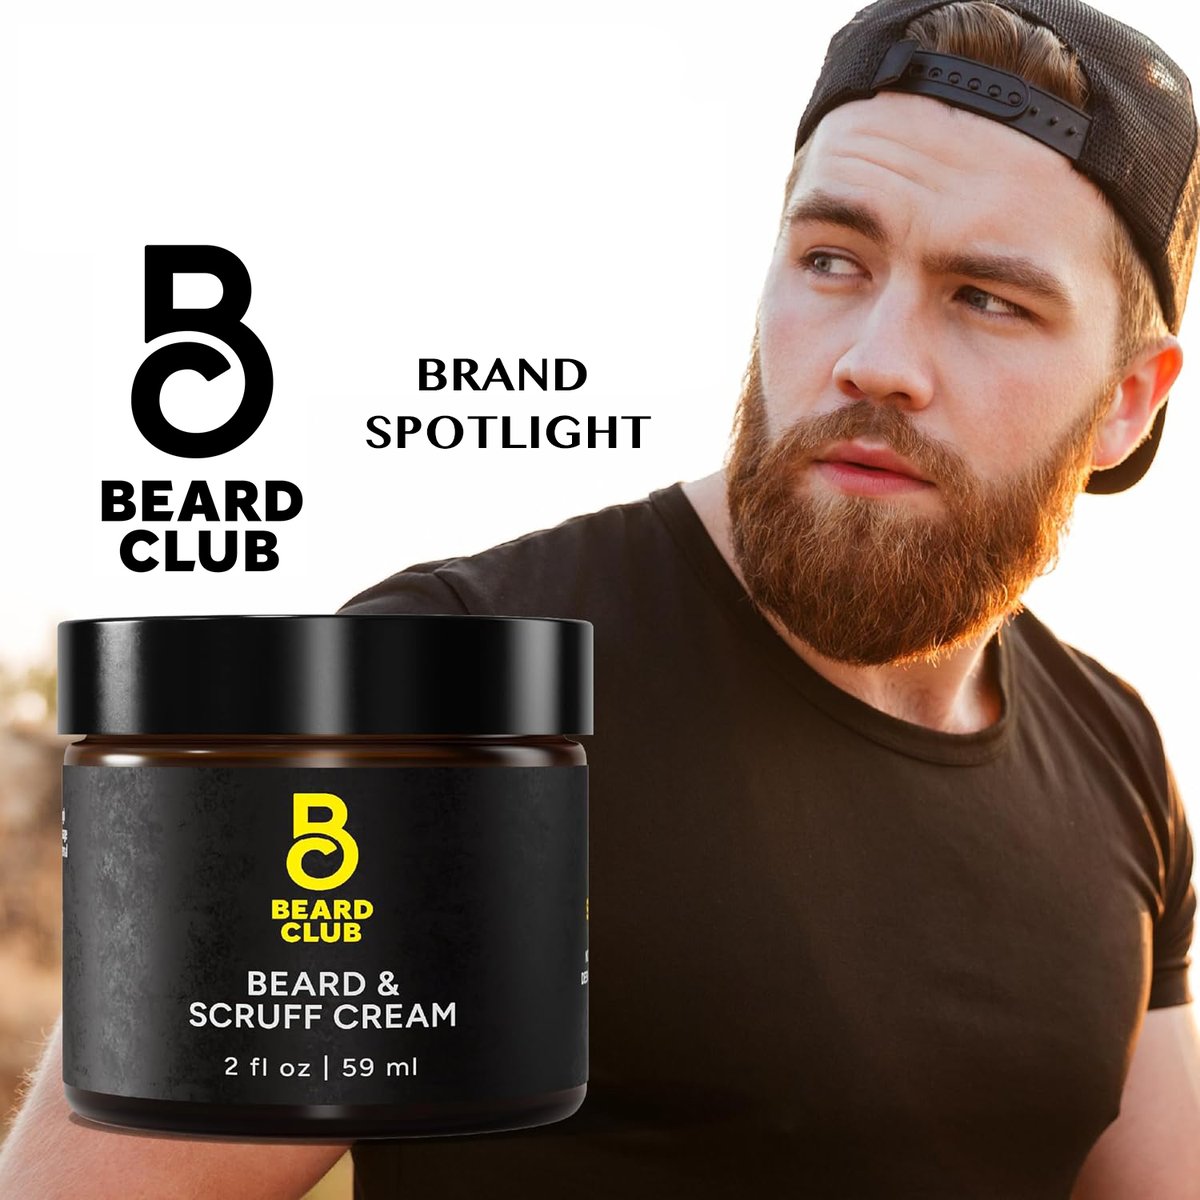 baldandthebearded.com/beard-club-ult…

BALD AND THE BEARDED Team 

#beards #mensgrooming #beardedmen #shavingregimen #americancrew #baldandthebearded